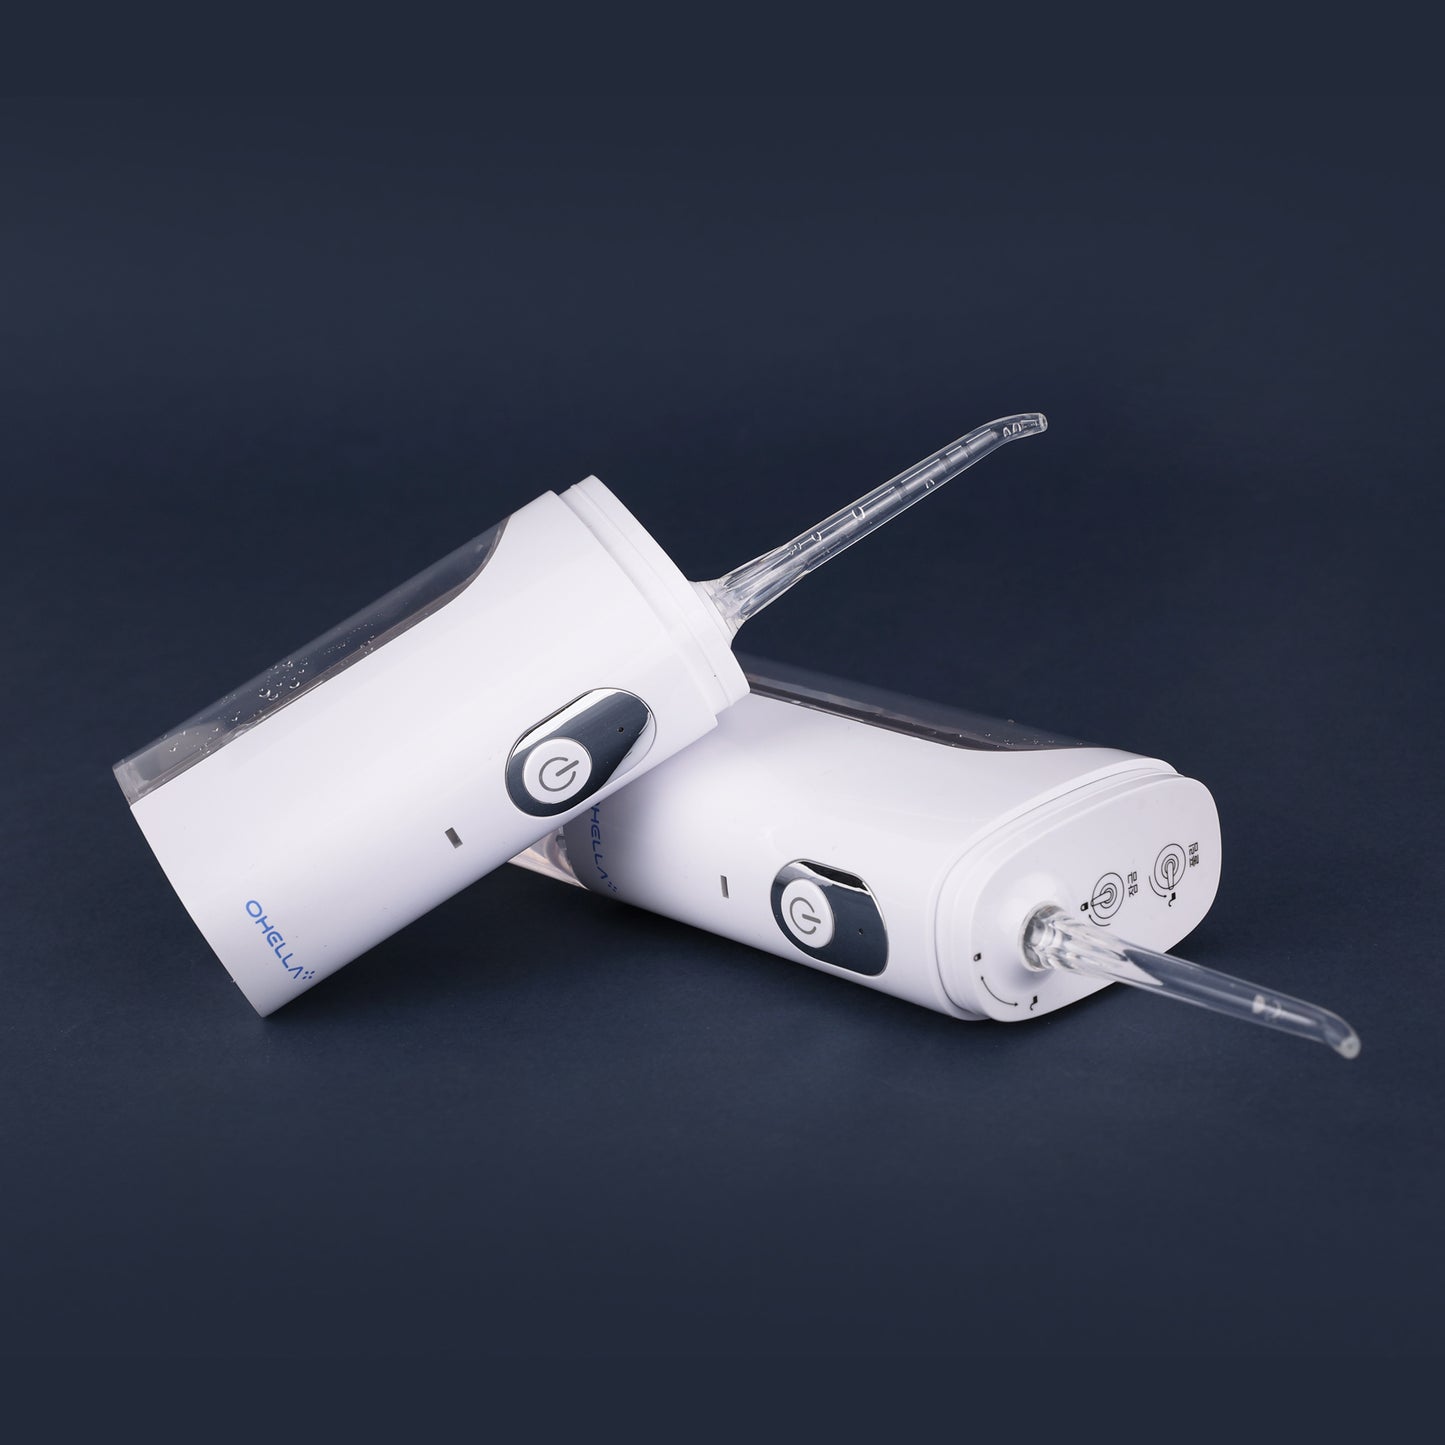 韓國 ABKO Ohella OI03 充電式水牙線 Portable Water Flosser